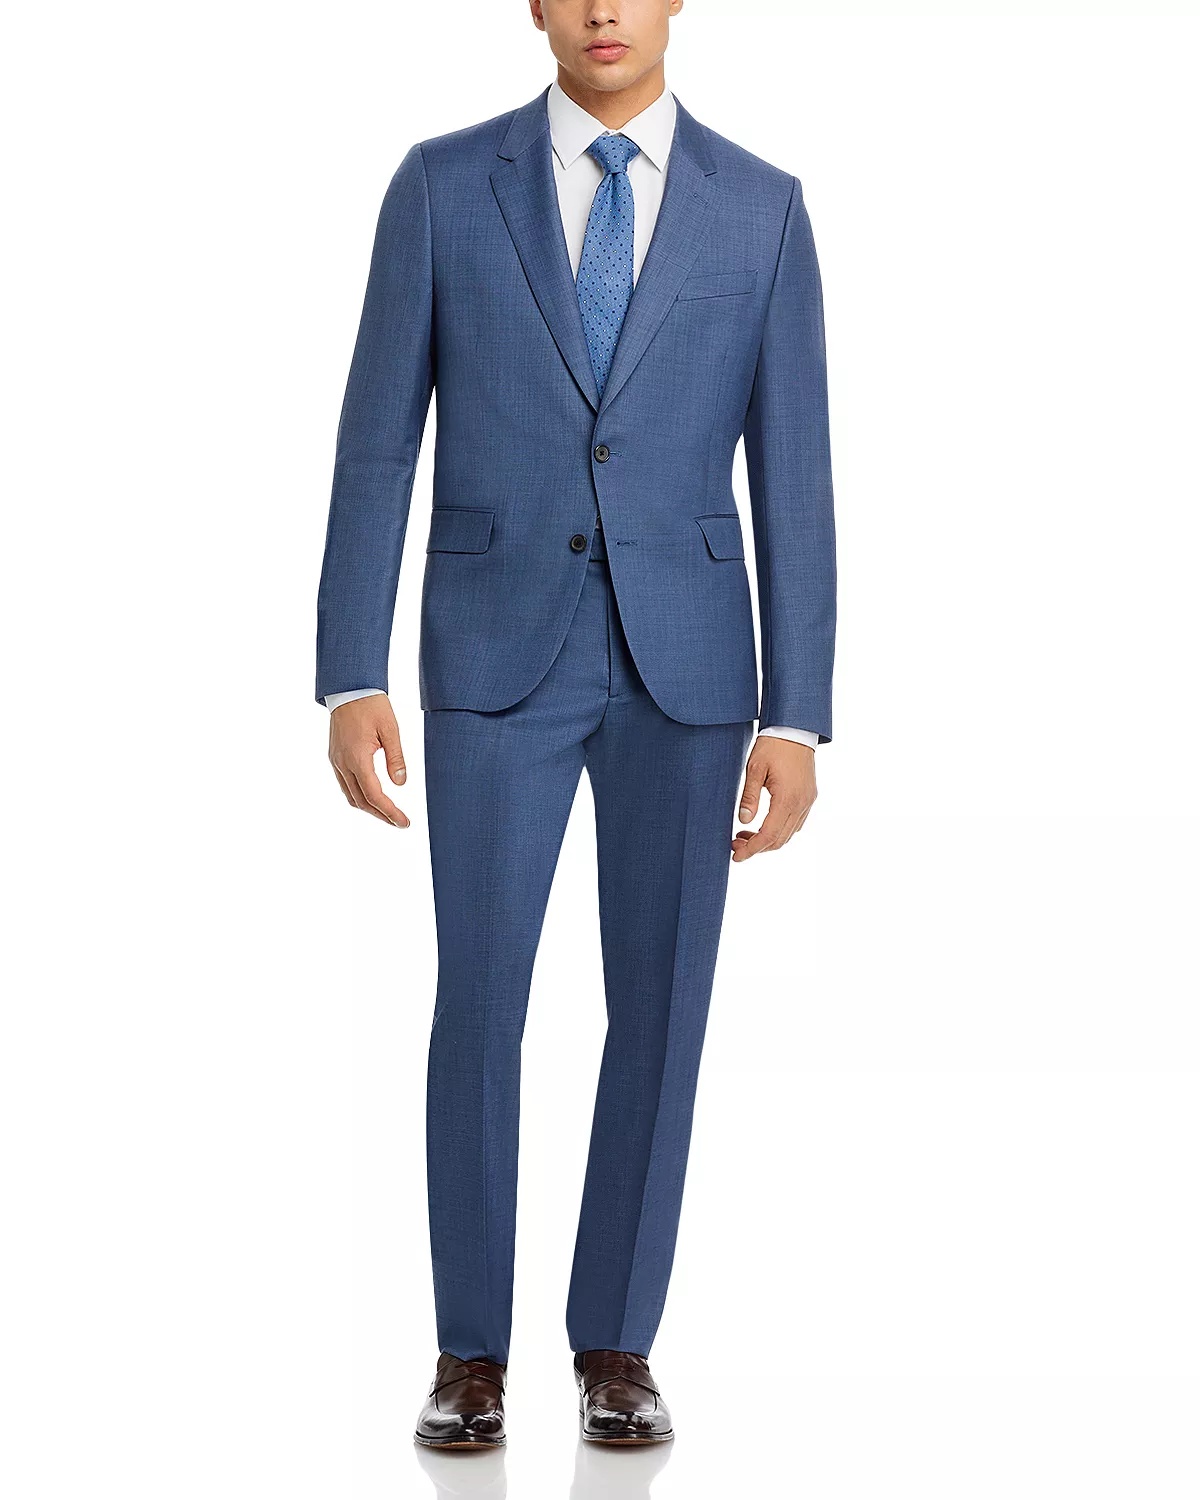 Soho Sharkskin Extra Slim Fit Suit - 1